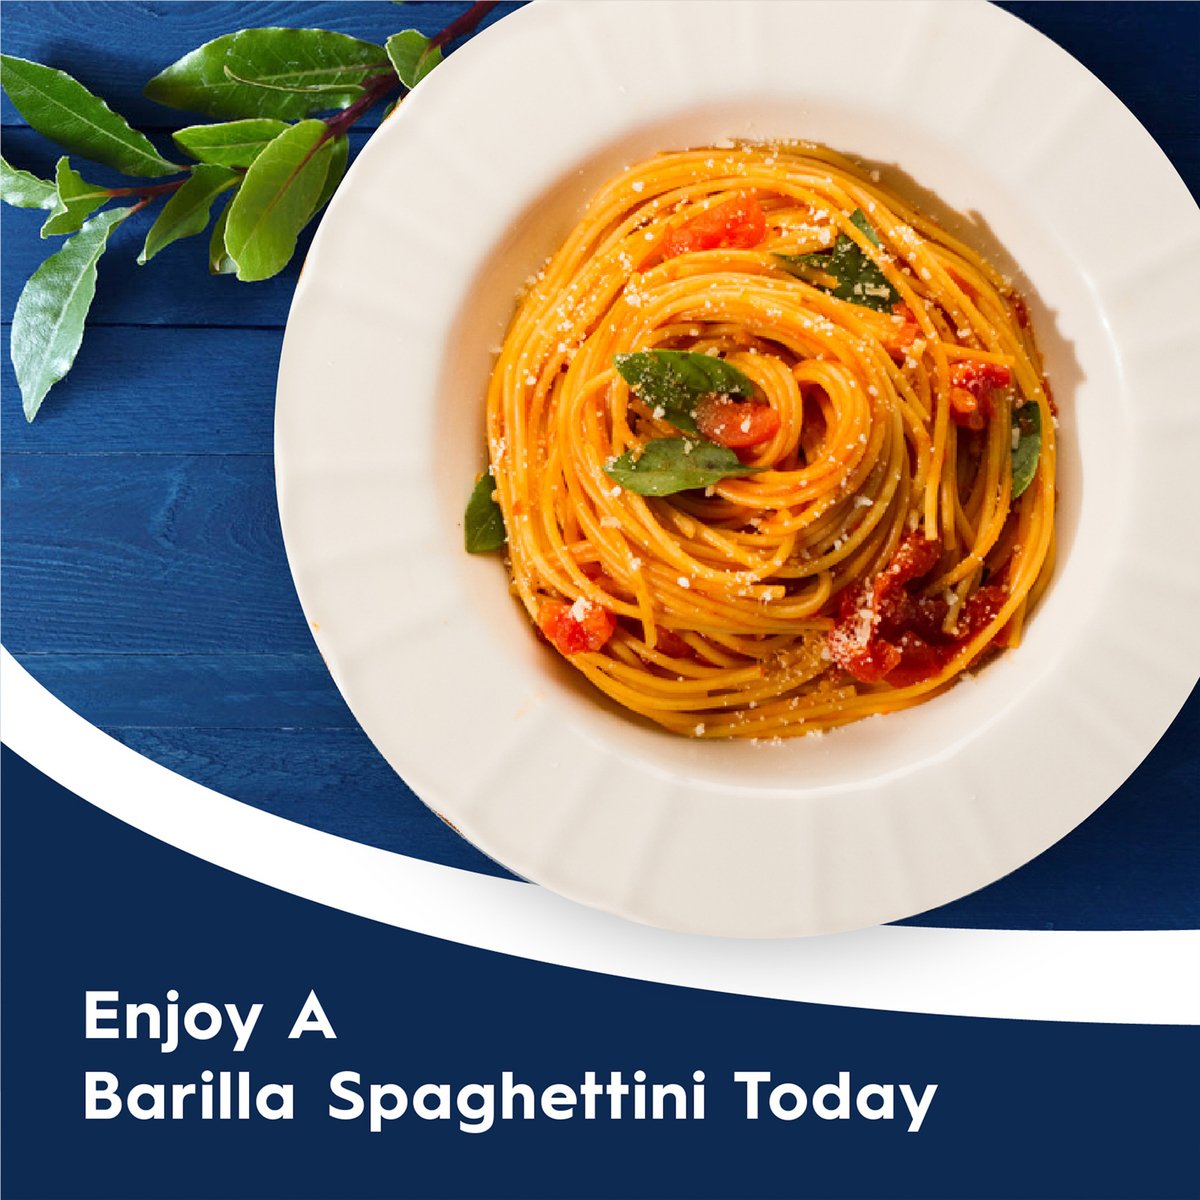 Barilla Spaghettini No.3 500 g